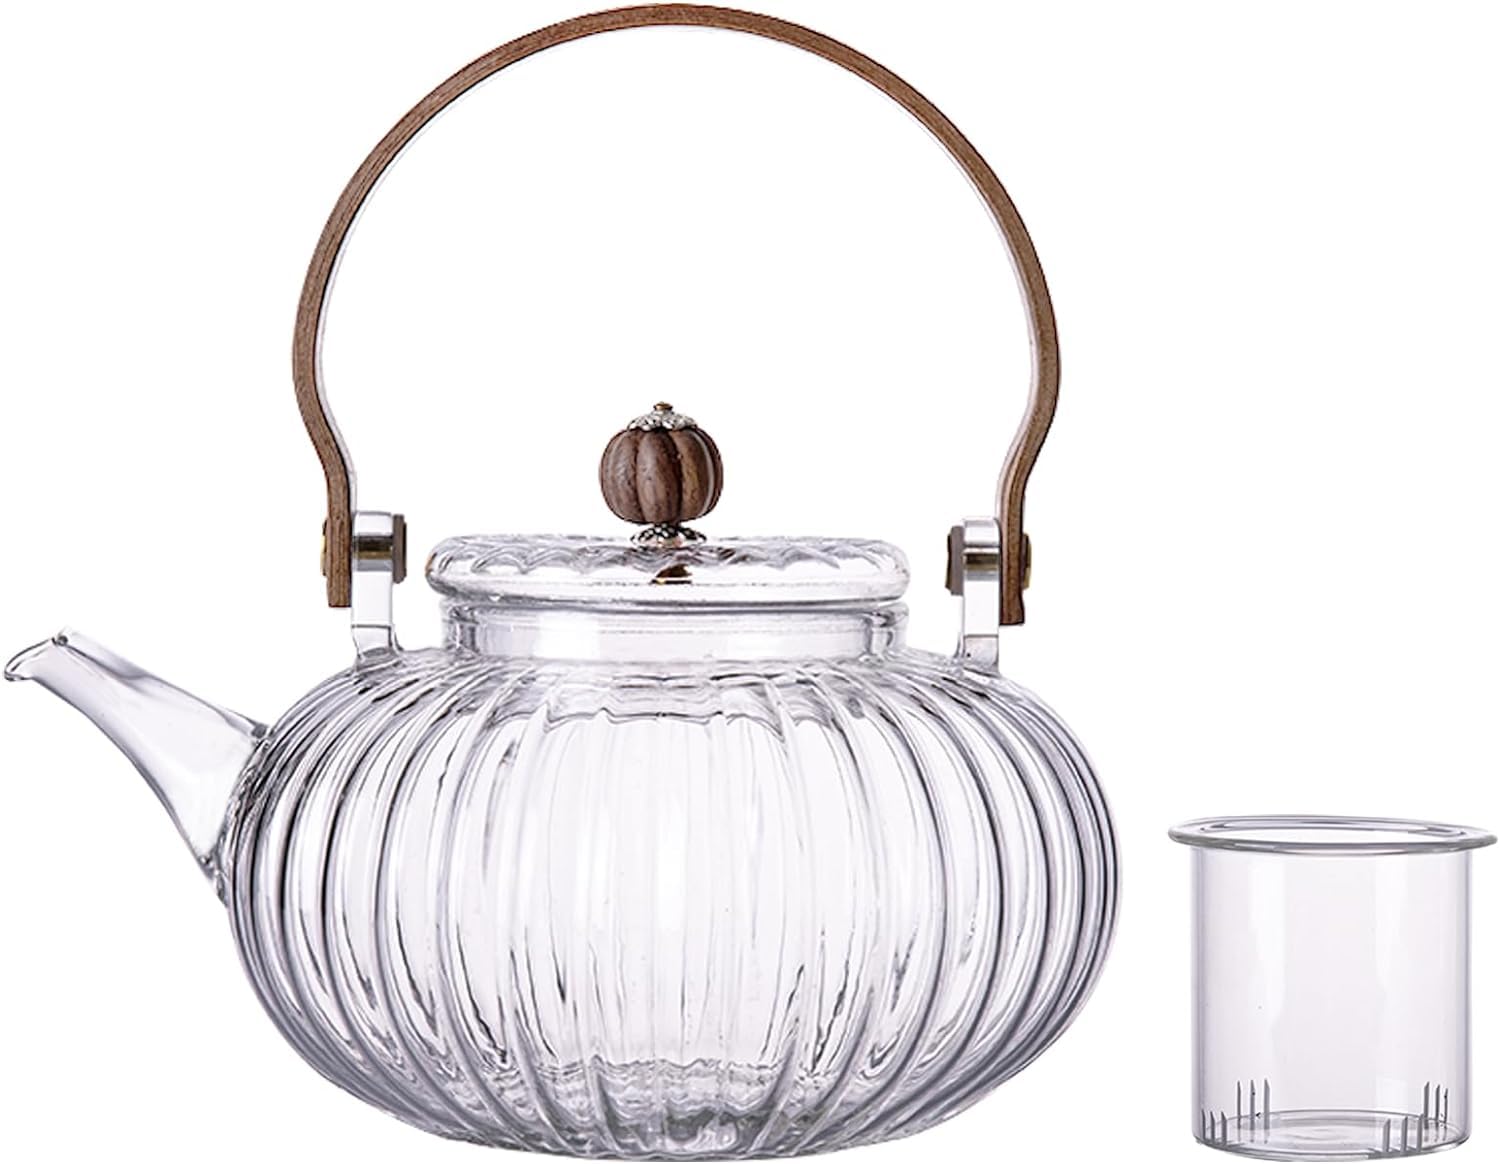 Motanber Pumkin Glass Teapot,Stovetop & electric stove Safe,clear kettle with infuser,27 oz(800ml), For Blooming Flower Tea and Loose Leaf Tea Maker Set